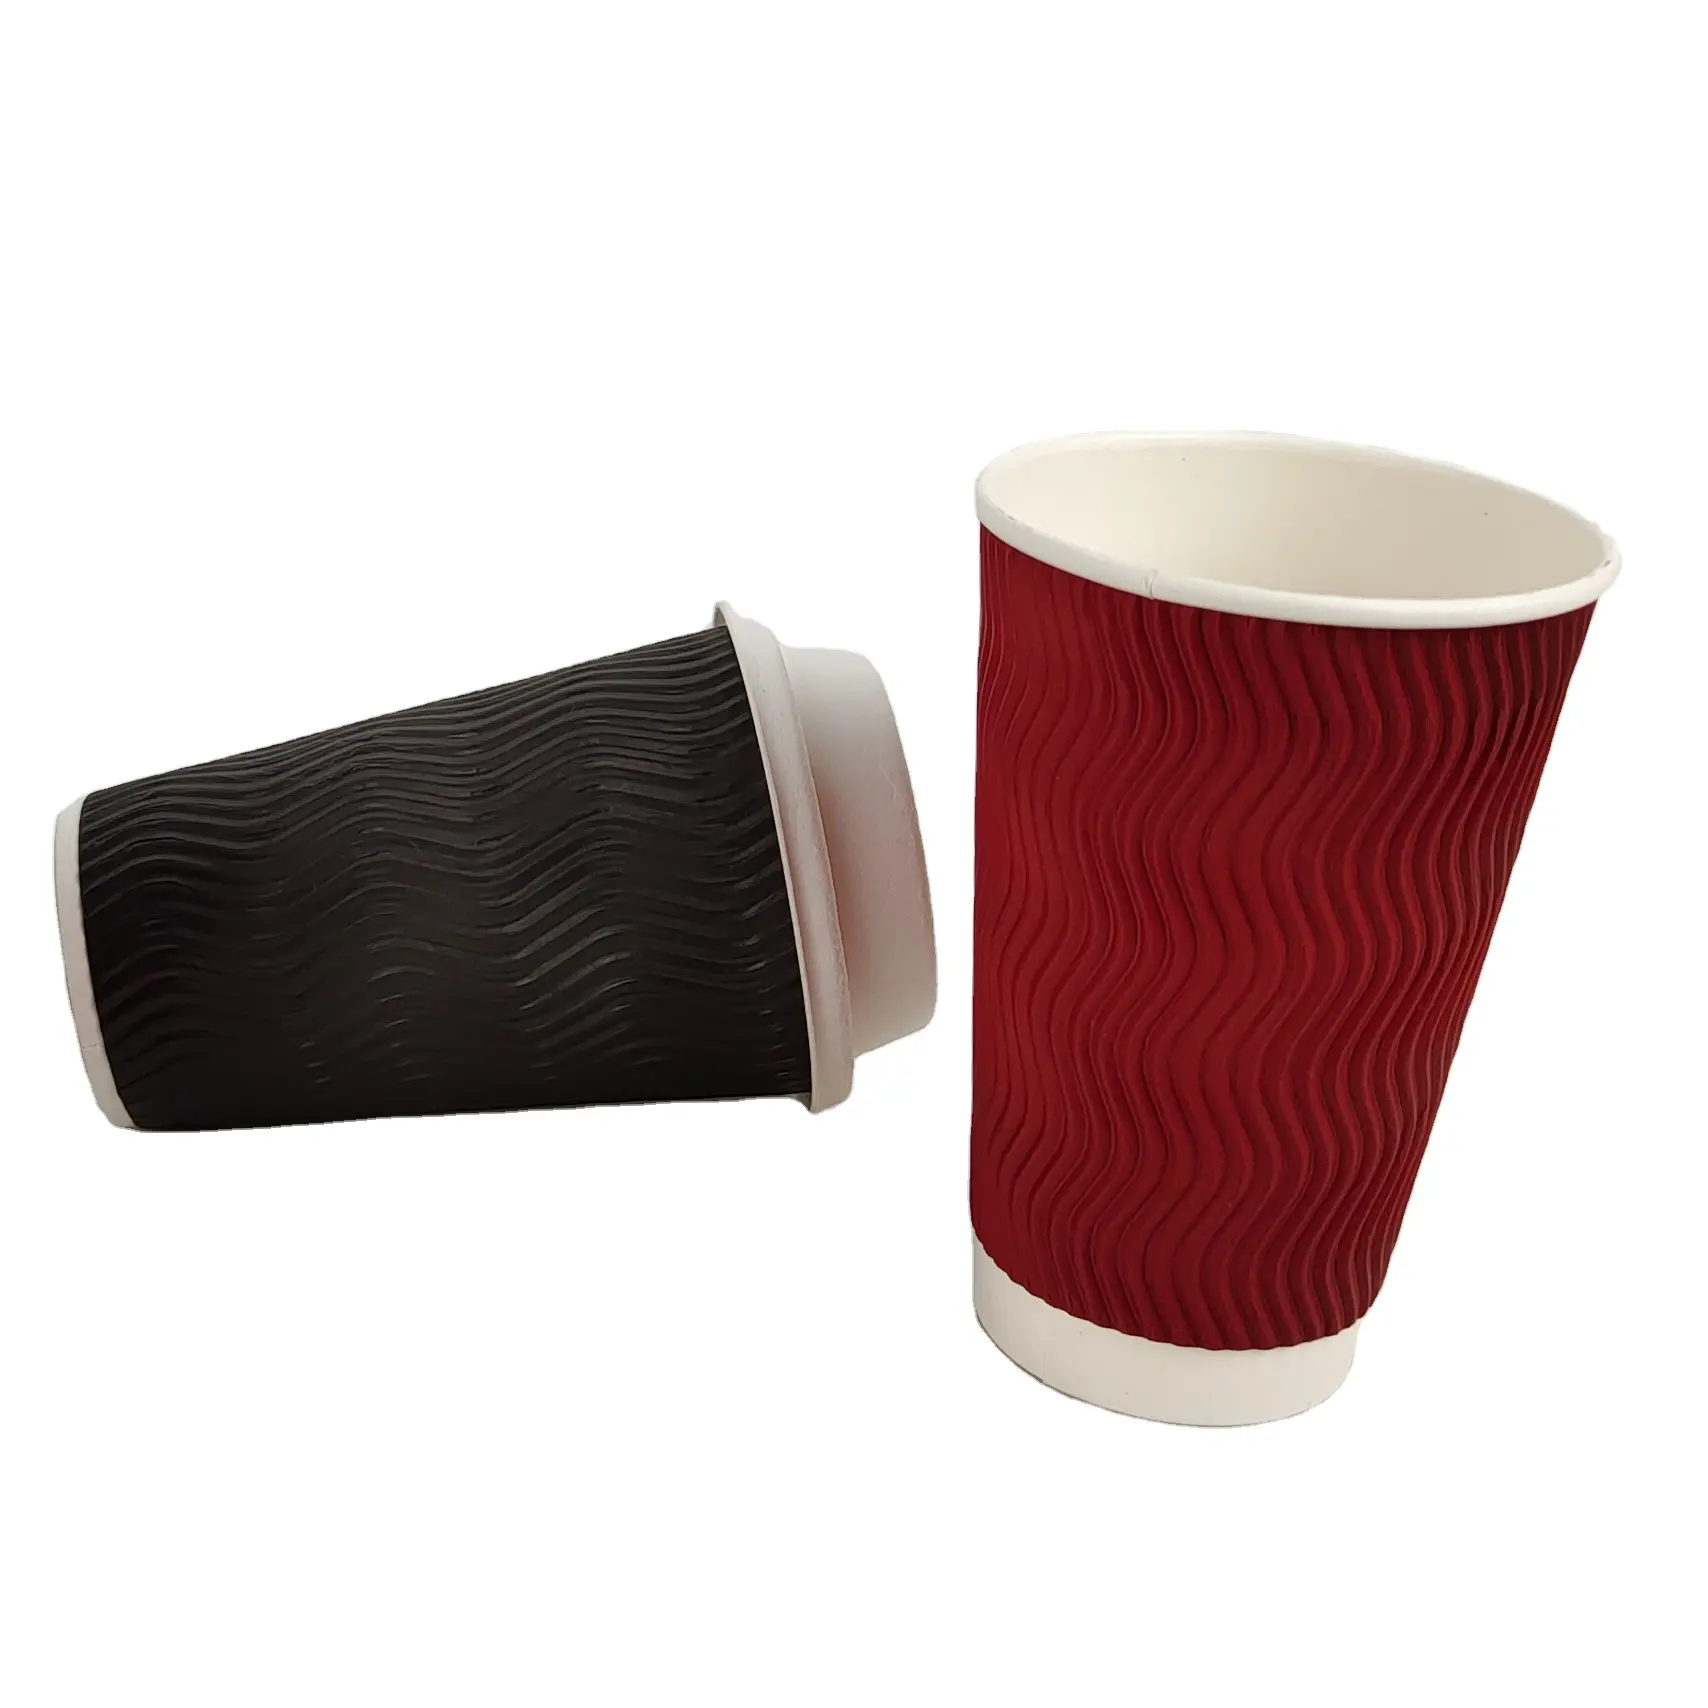 disposable paper cups with lids bleach 100% biodegradable waterproof Sugar cane pulp paper Cafe Latte manufacturer Black Coff